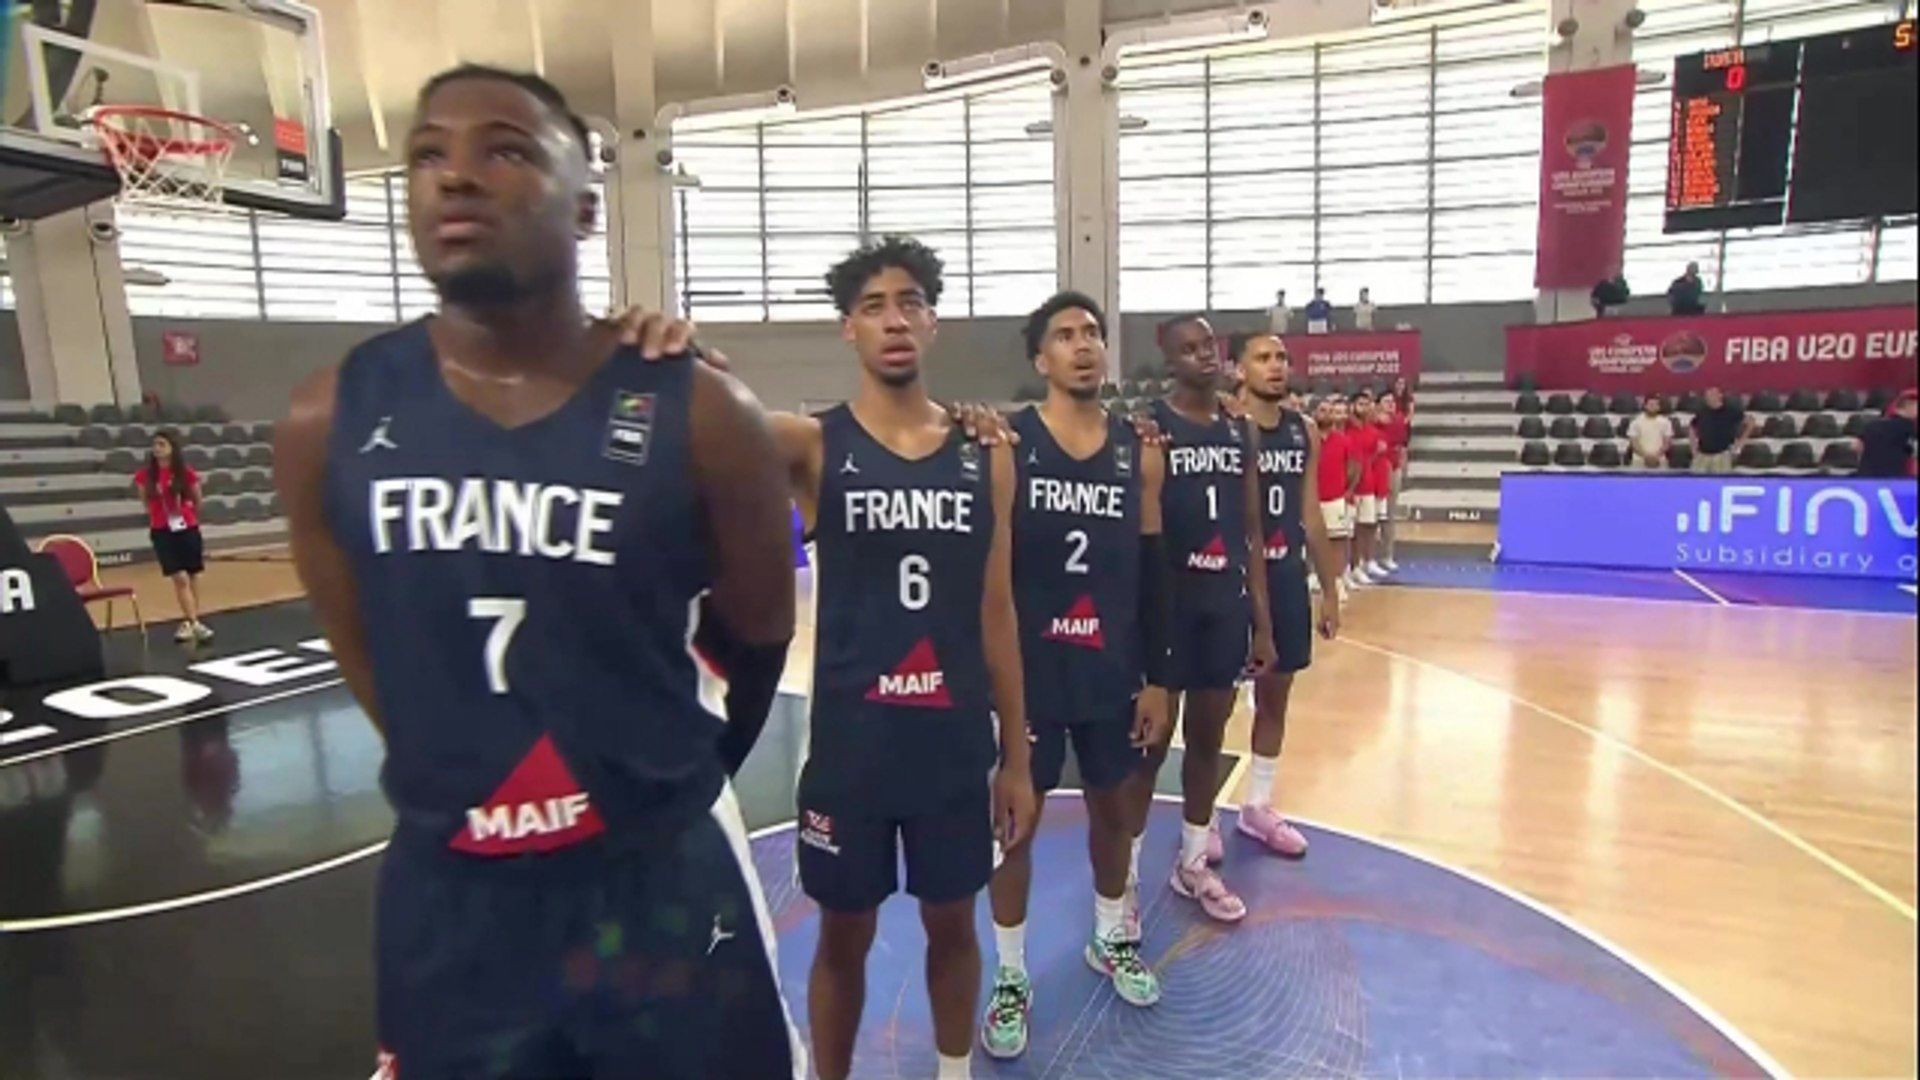 Le replay de Croatie - France - Basket - Euro U20 - Vidéo Dailymotion